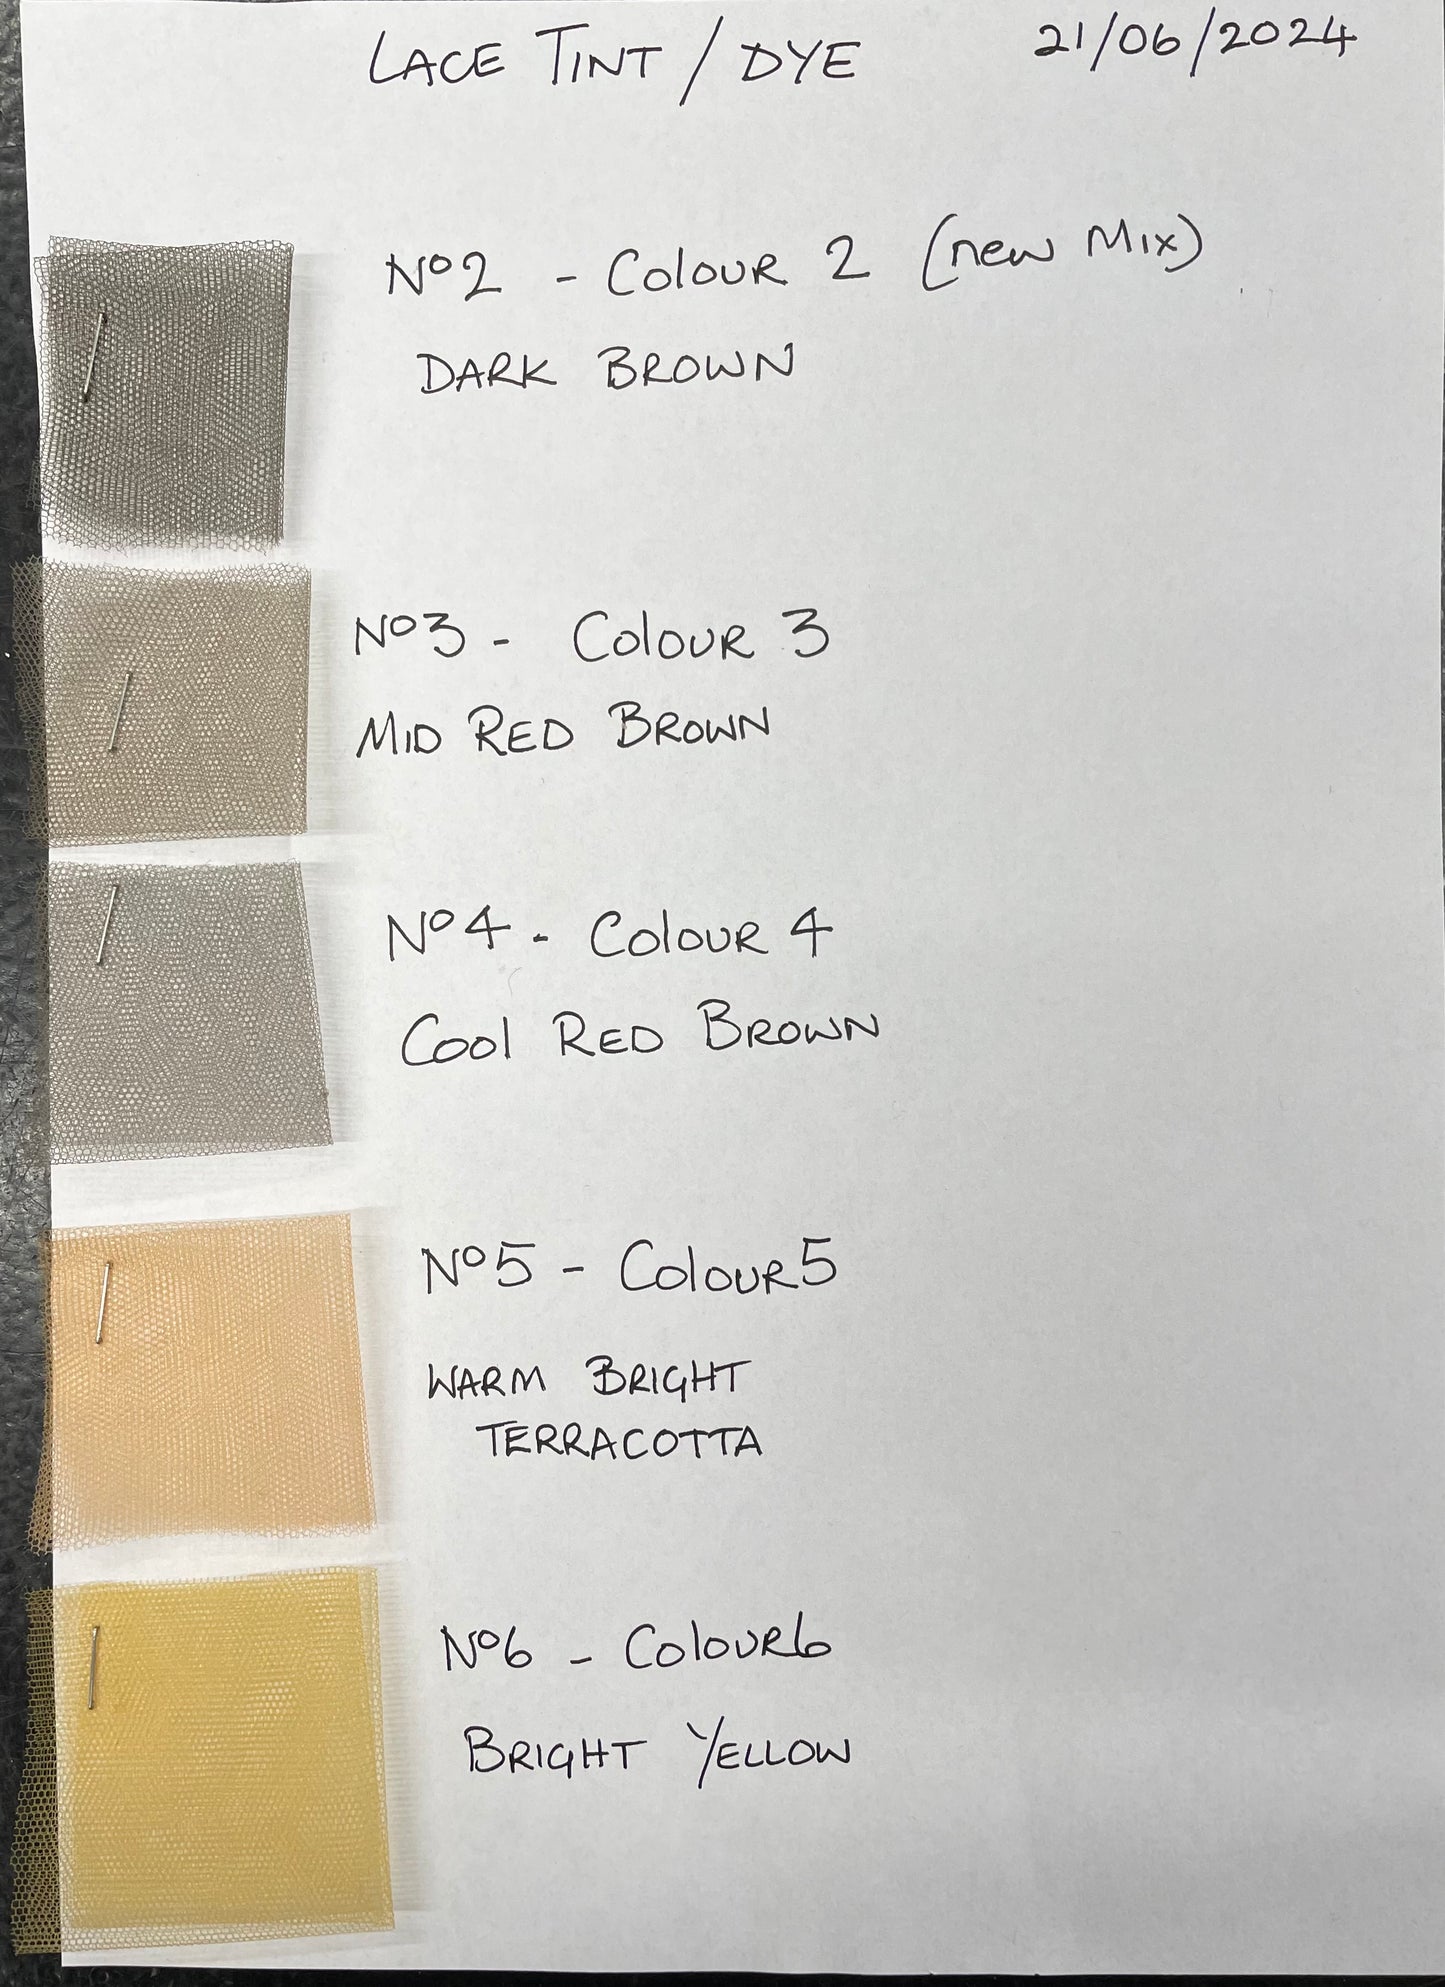 144 - Front lace Dye/Lace Tint - Single 50g Pot